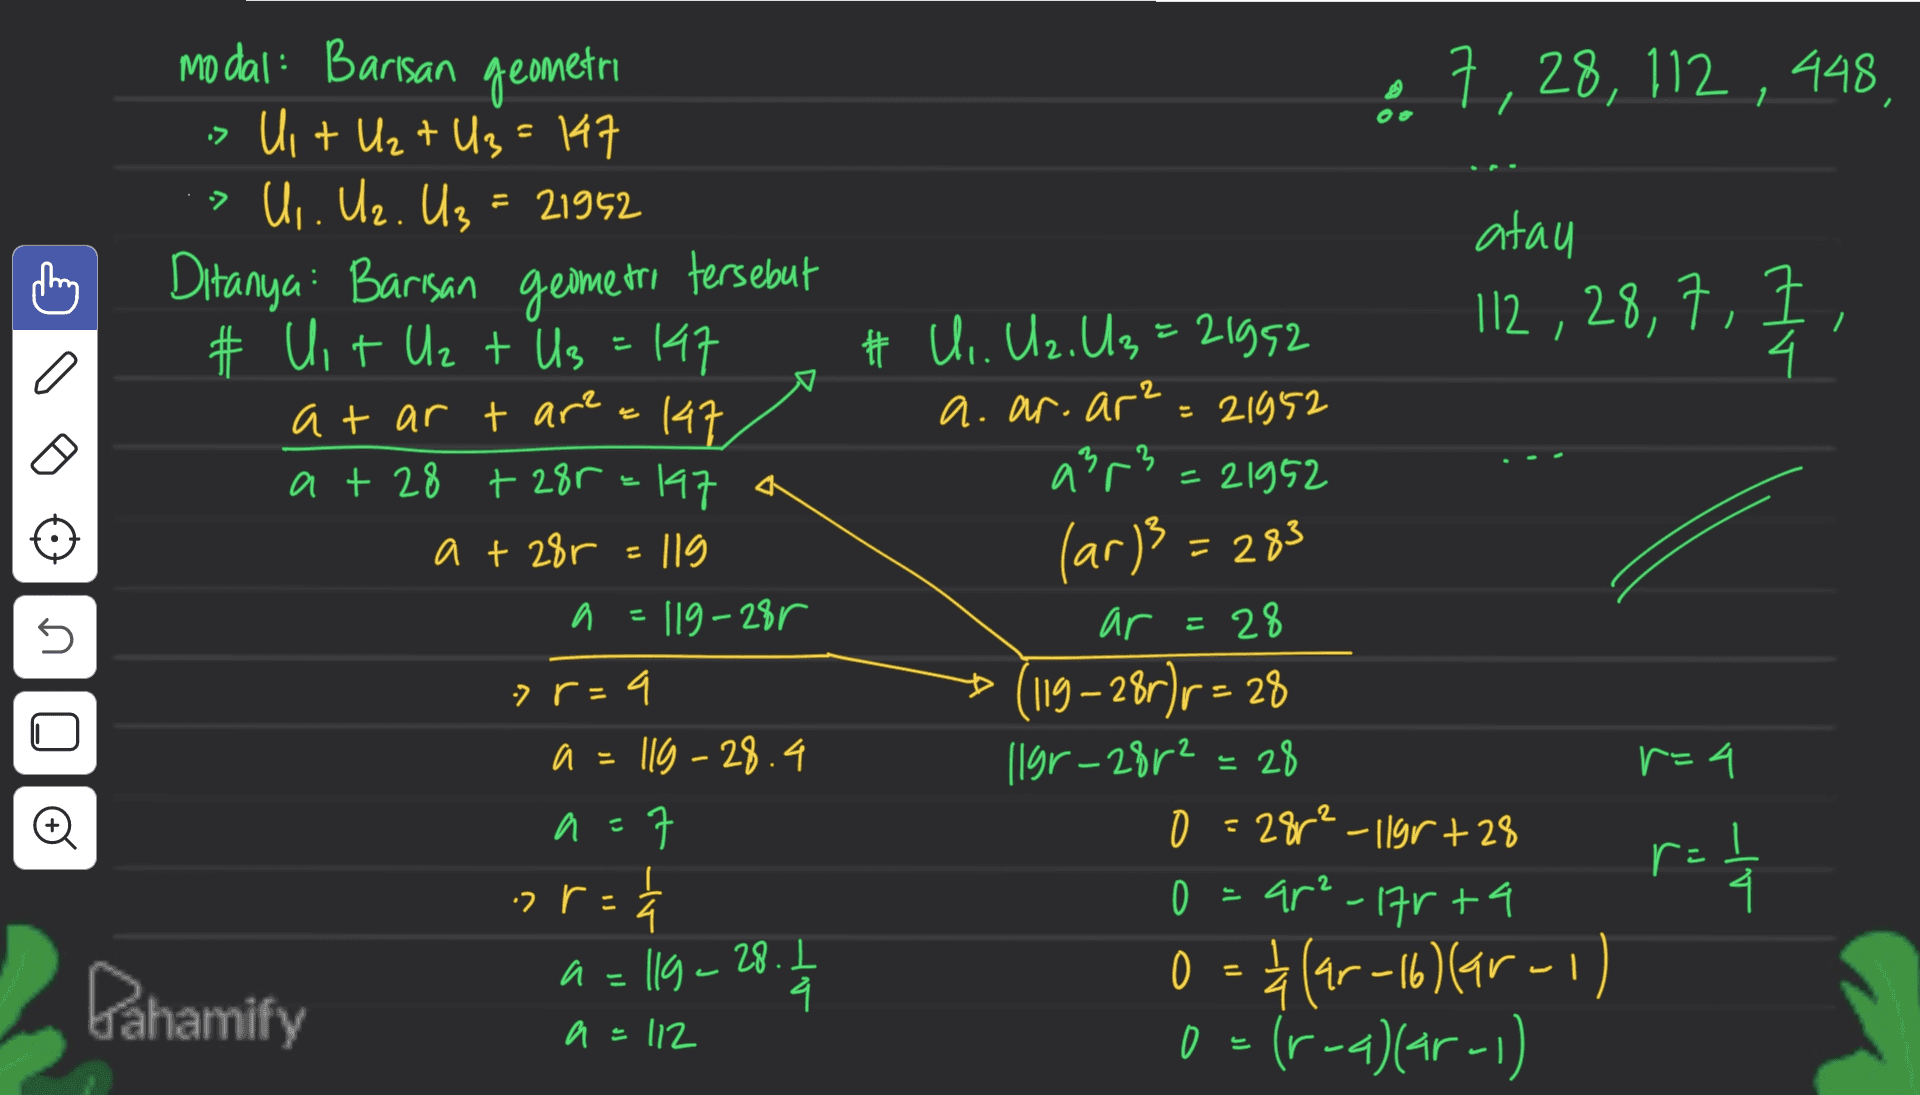 • 7, 28, 112 , 448 > 112 , 28, 7, 1 2 a modal: Barisan geometri is Uit U₂+U₂ = 147 U,. Uz. U₂ = 21952 Ditanya: Barisan geometri tersebut # Uit Uz t Us = 147 at ar t area 147 at 28 +2&r=147 a + 28r - 119 a a = 119-28r q a=119 -28.4 a a 37 ㅋ . r or= 수 a U atau # Ui. U2, U3=21992 , a. ar.ar? = 21952 arr3 - 21952 = (ar)3 = 283 ar = 28 119–28r) r = 28 llgr-28r2 = 28 r=4 O 28r²-11gr+28 O o = ar²-17rta 0 = *(4-16 Mar - 1) 0 = (r--)(ar-1) .? r = r = 1/4 ra = llg - 28. 1-4 a = Pahamify a=112 